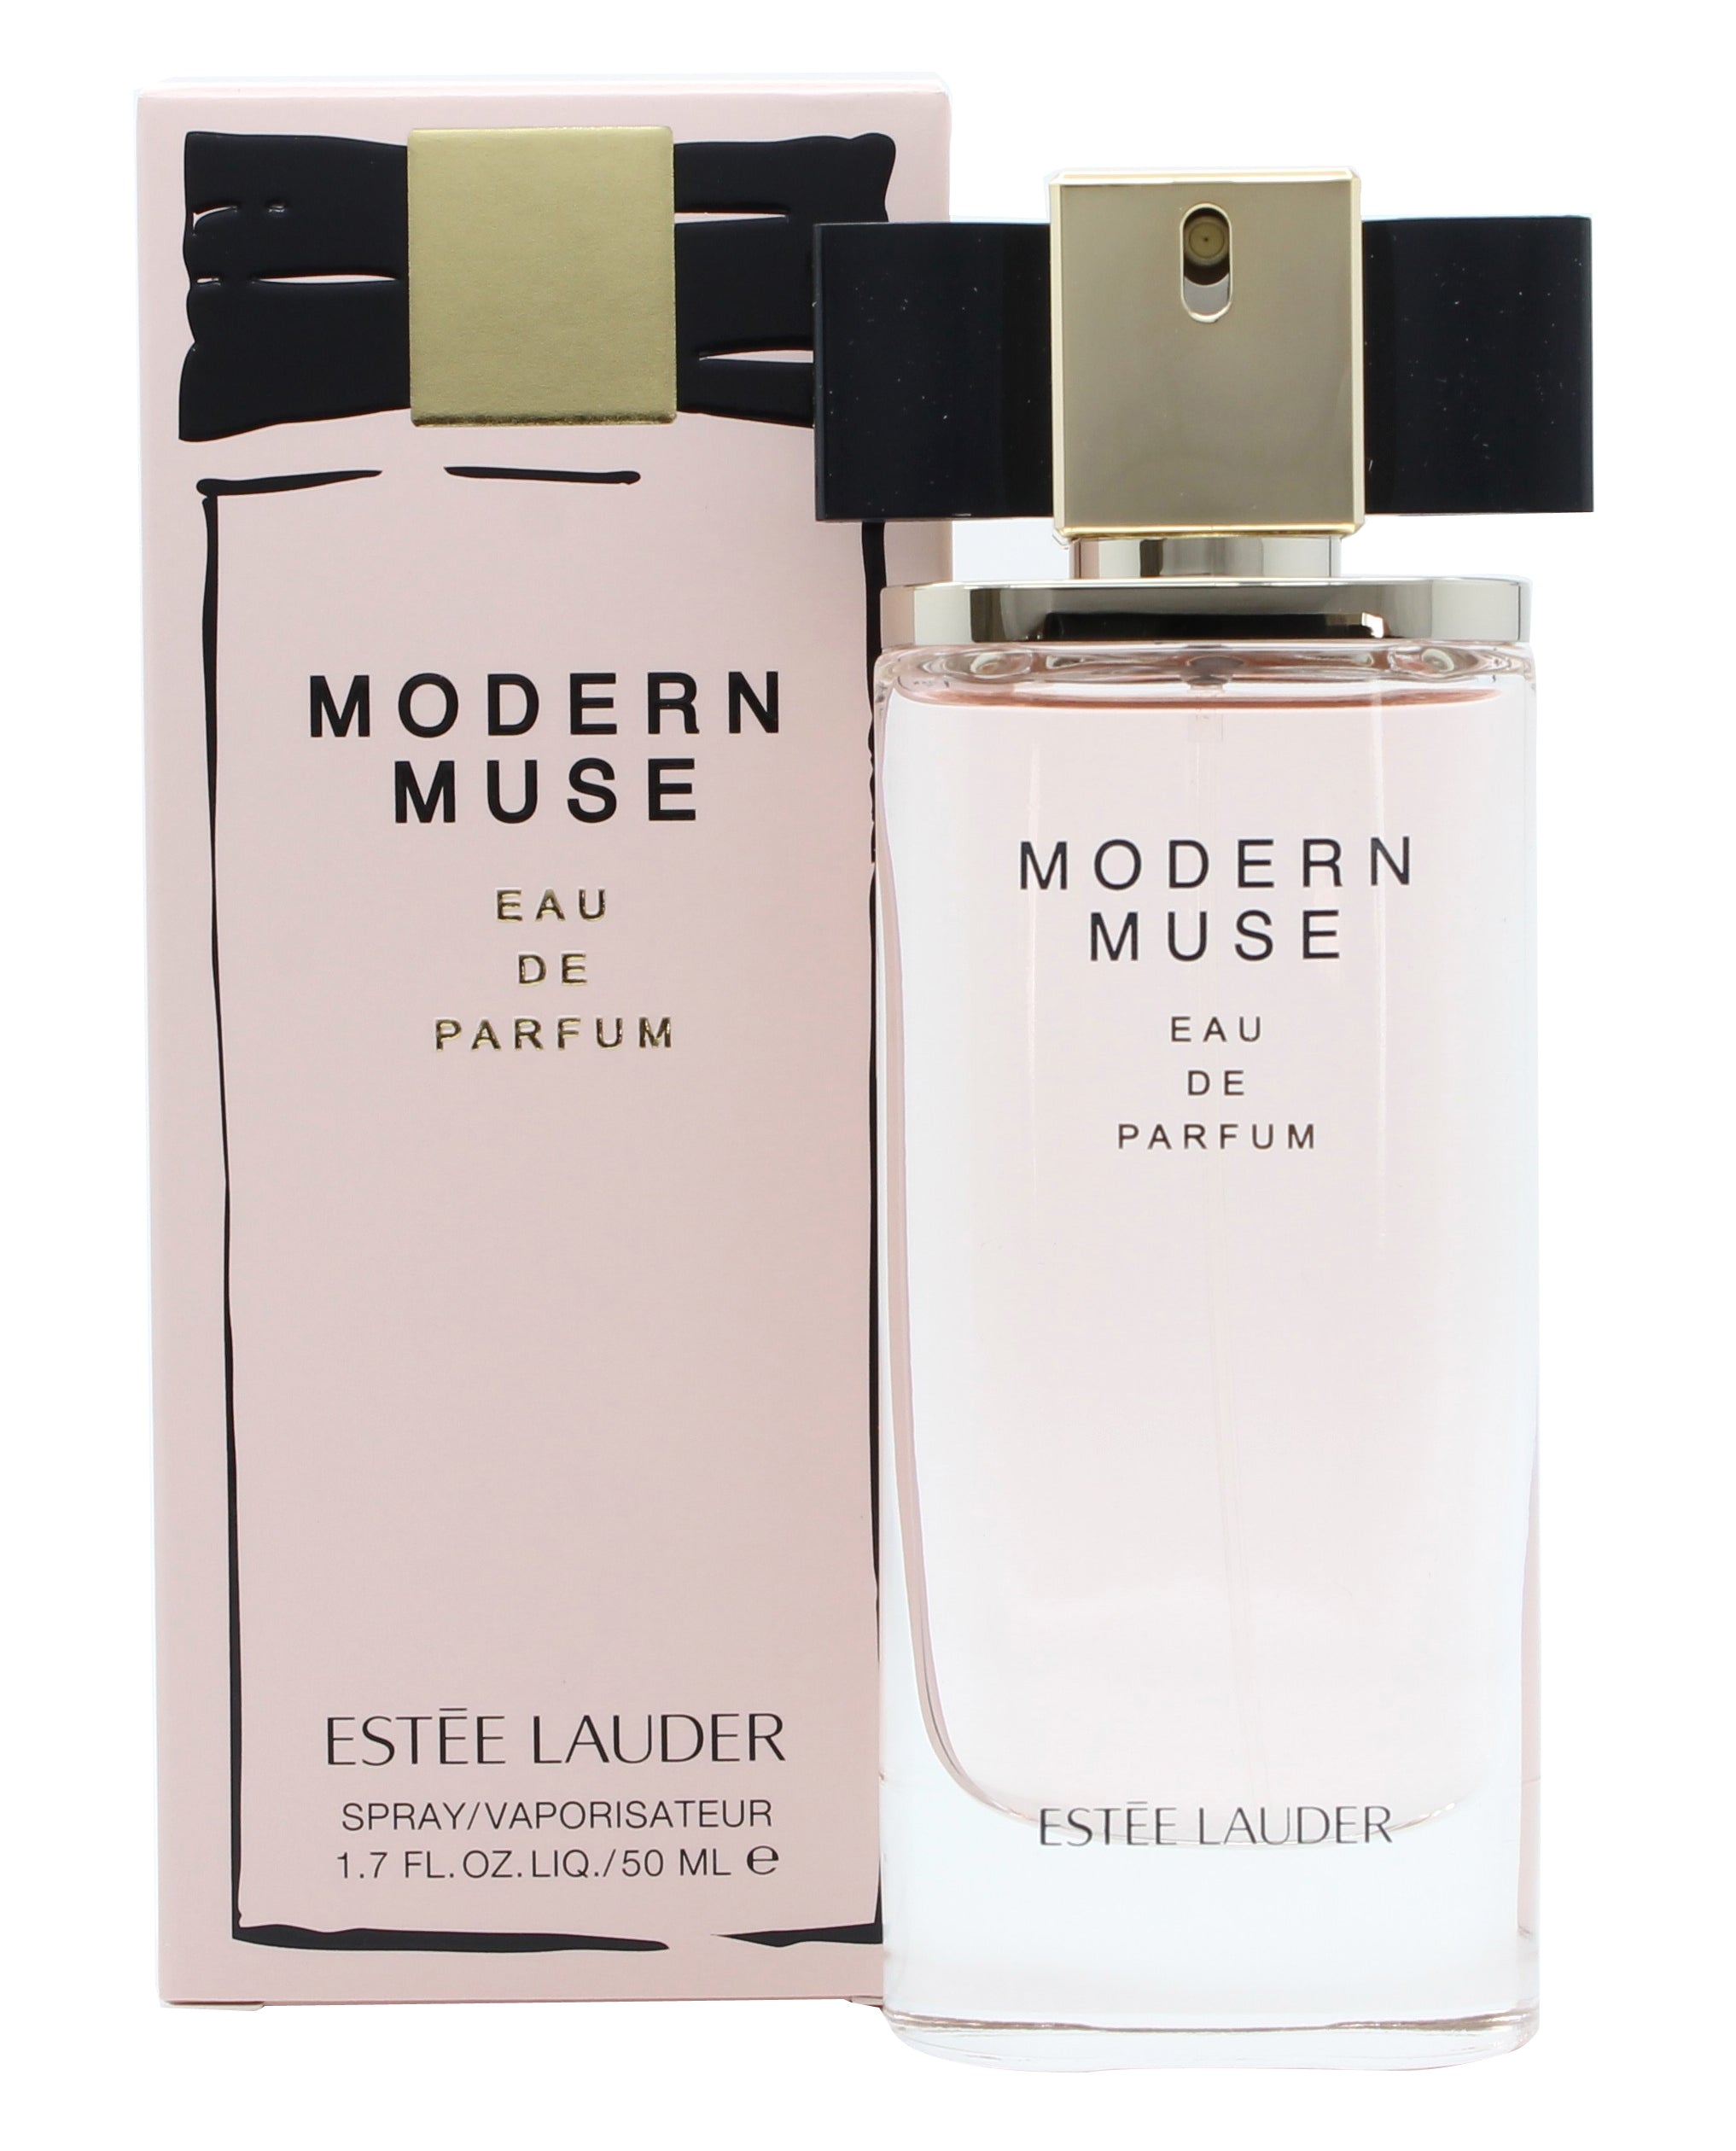 View Estee Lauder Modern Muse Eau de Parfum 50ml Spray information